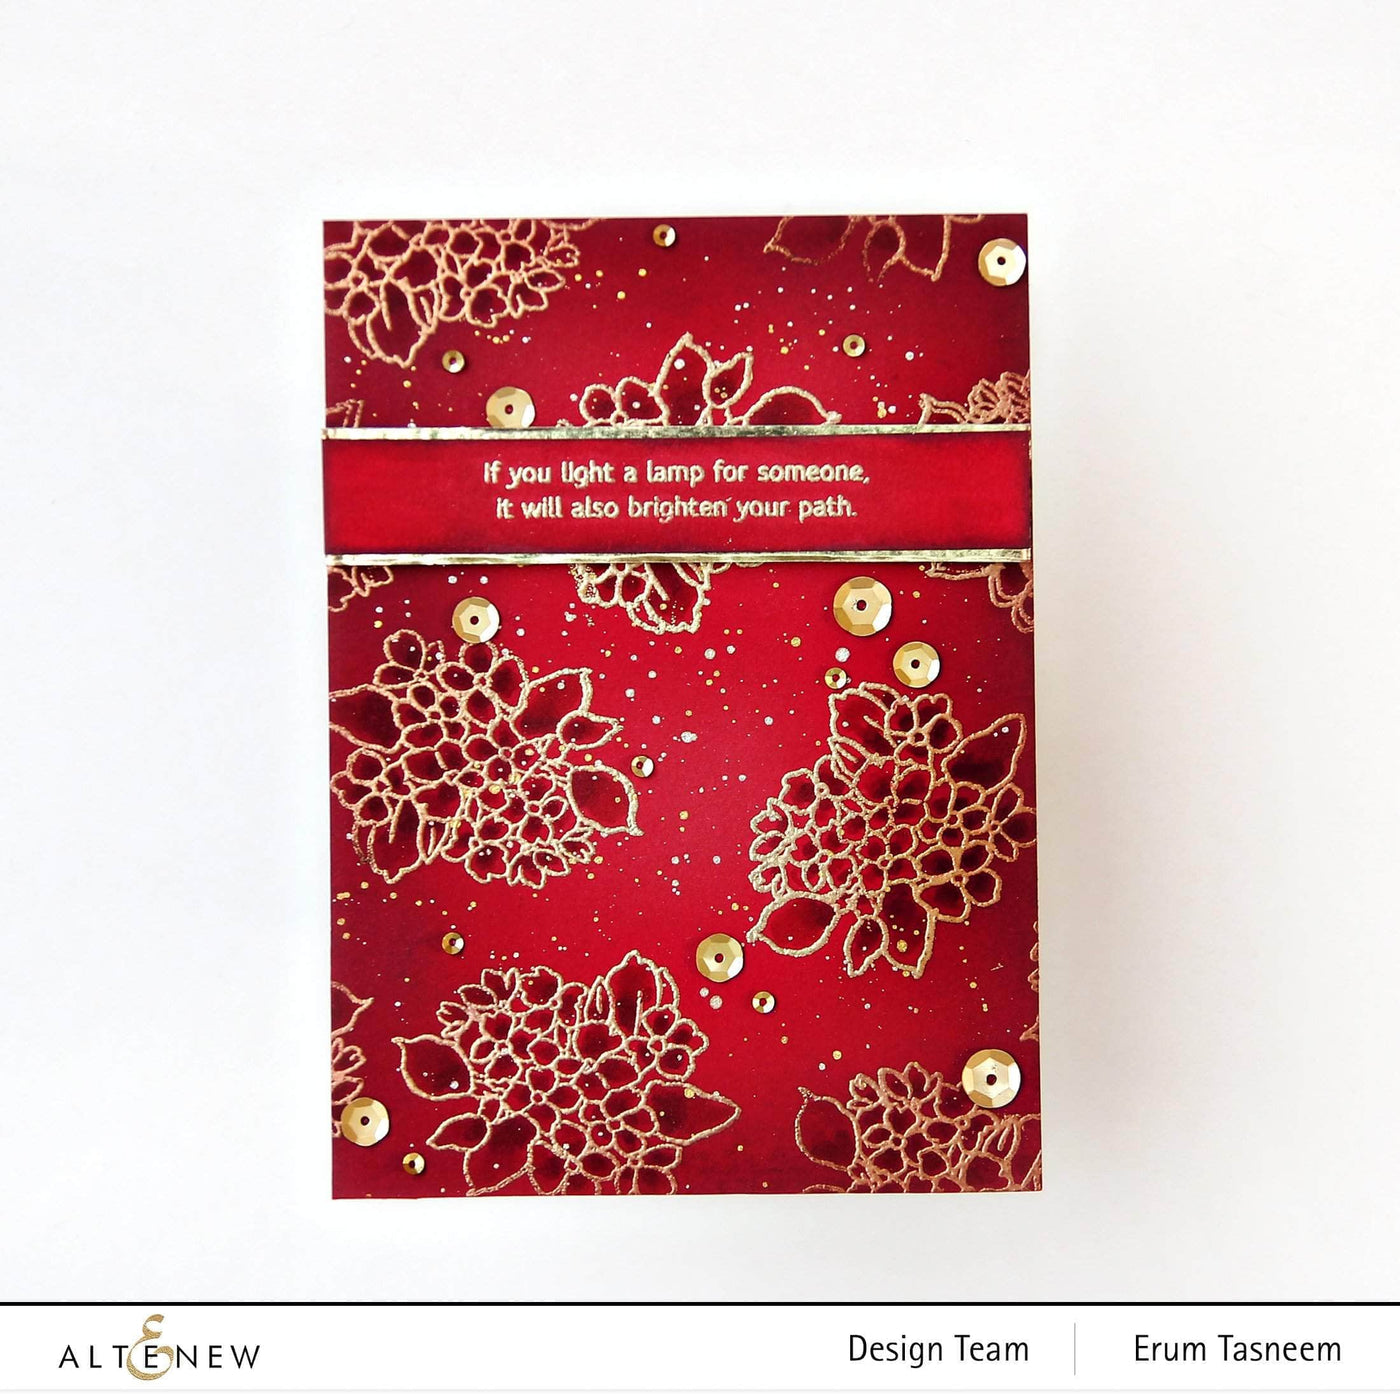 Altenew Creativity Kit Bundle Tranquil Scallops Creativity Cardmaking Kit